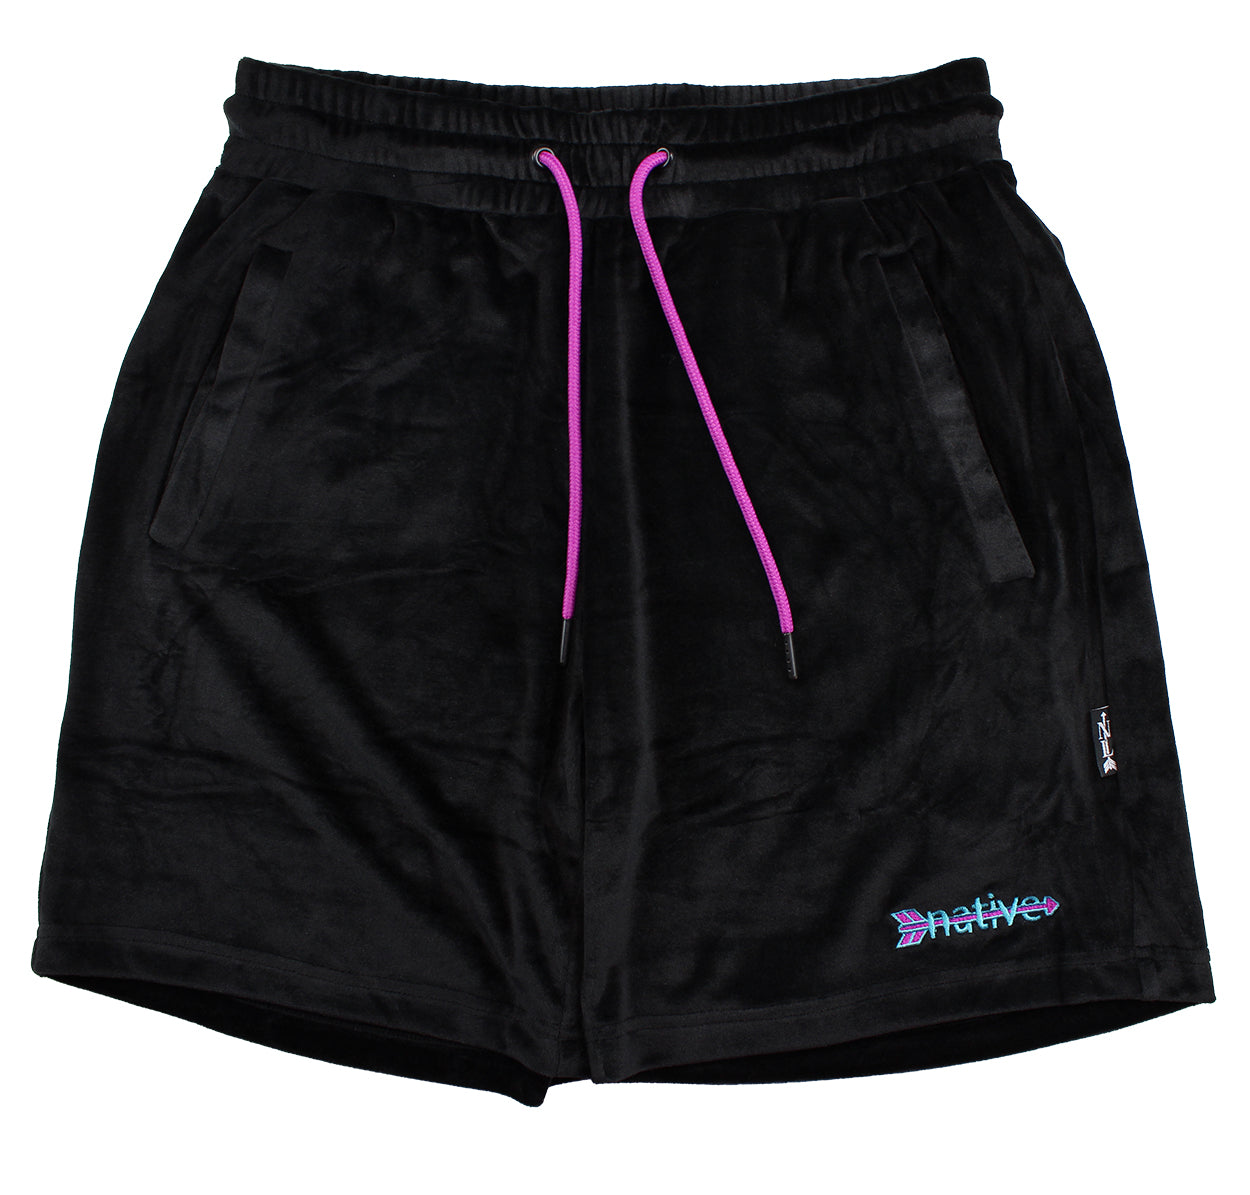 velour shorts in south beach (black)